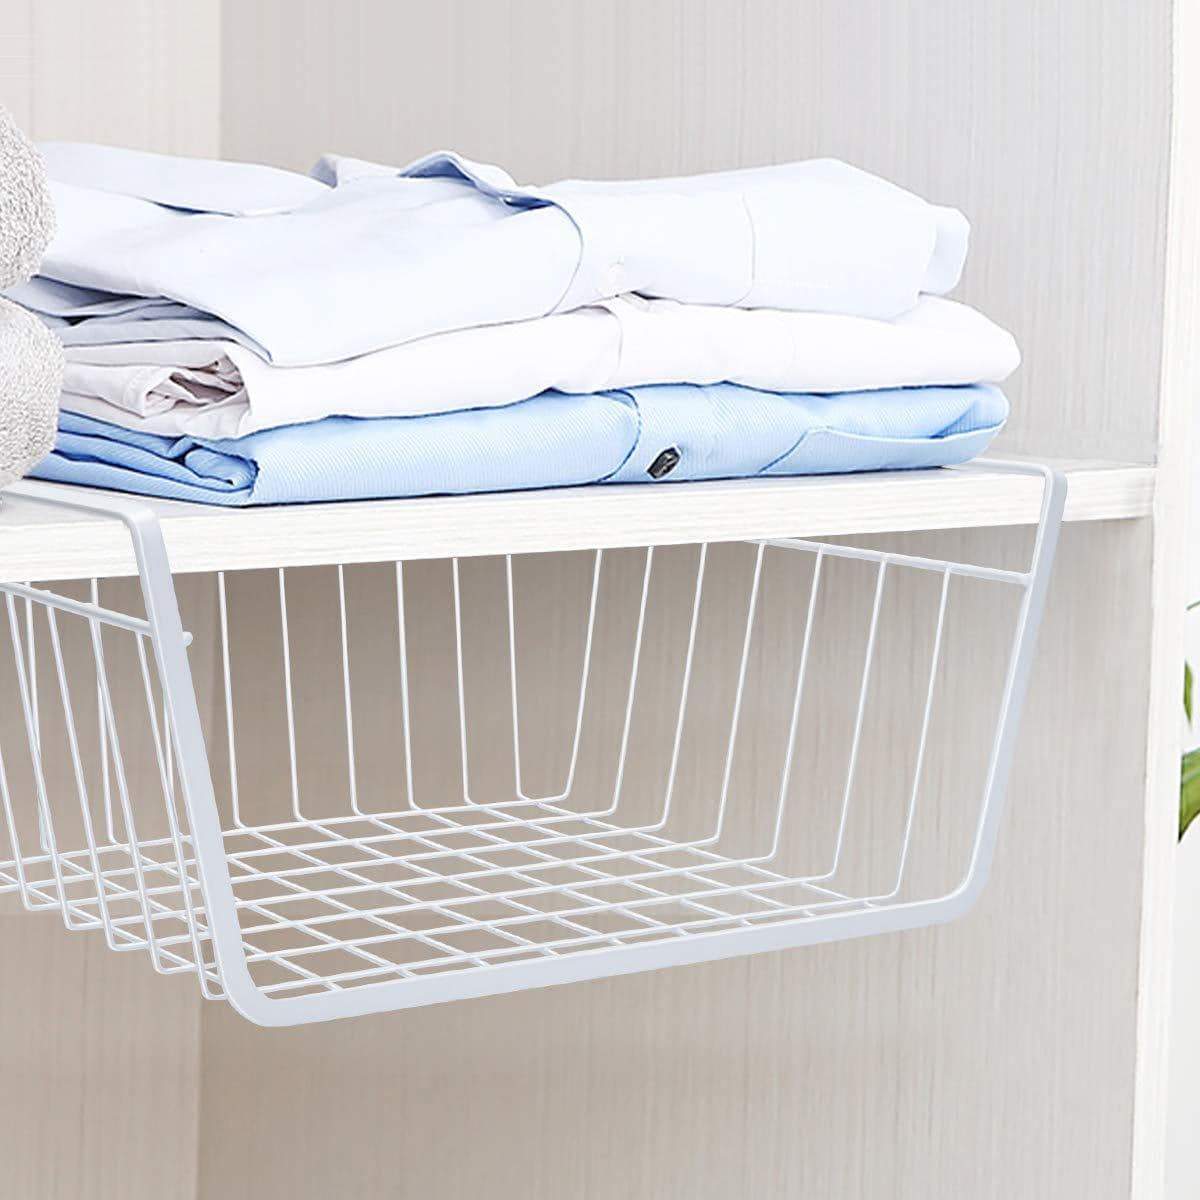 Buy now homeideas 4 pack under shelf basket white wire rack slides under shelves storage basket for kitchen pantry cabinet